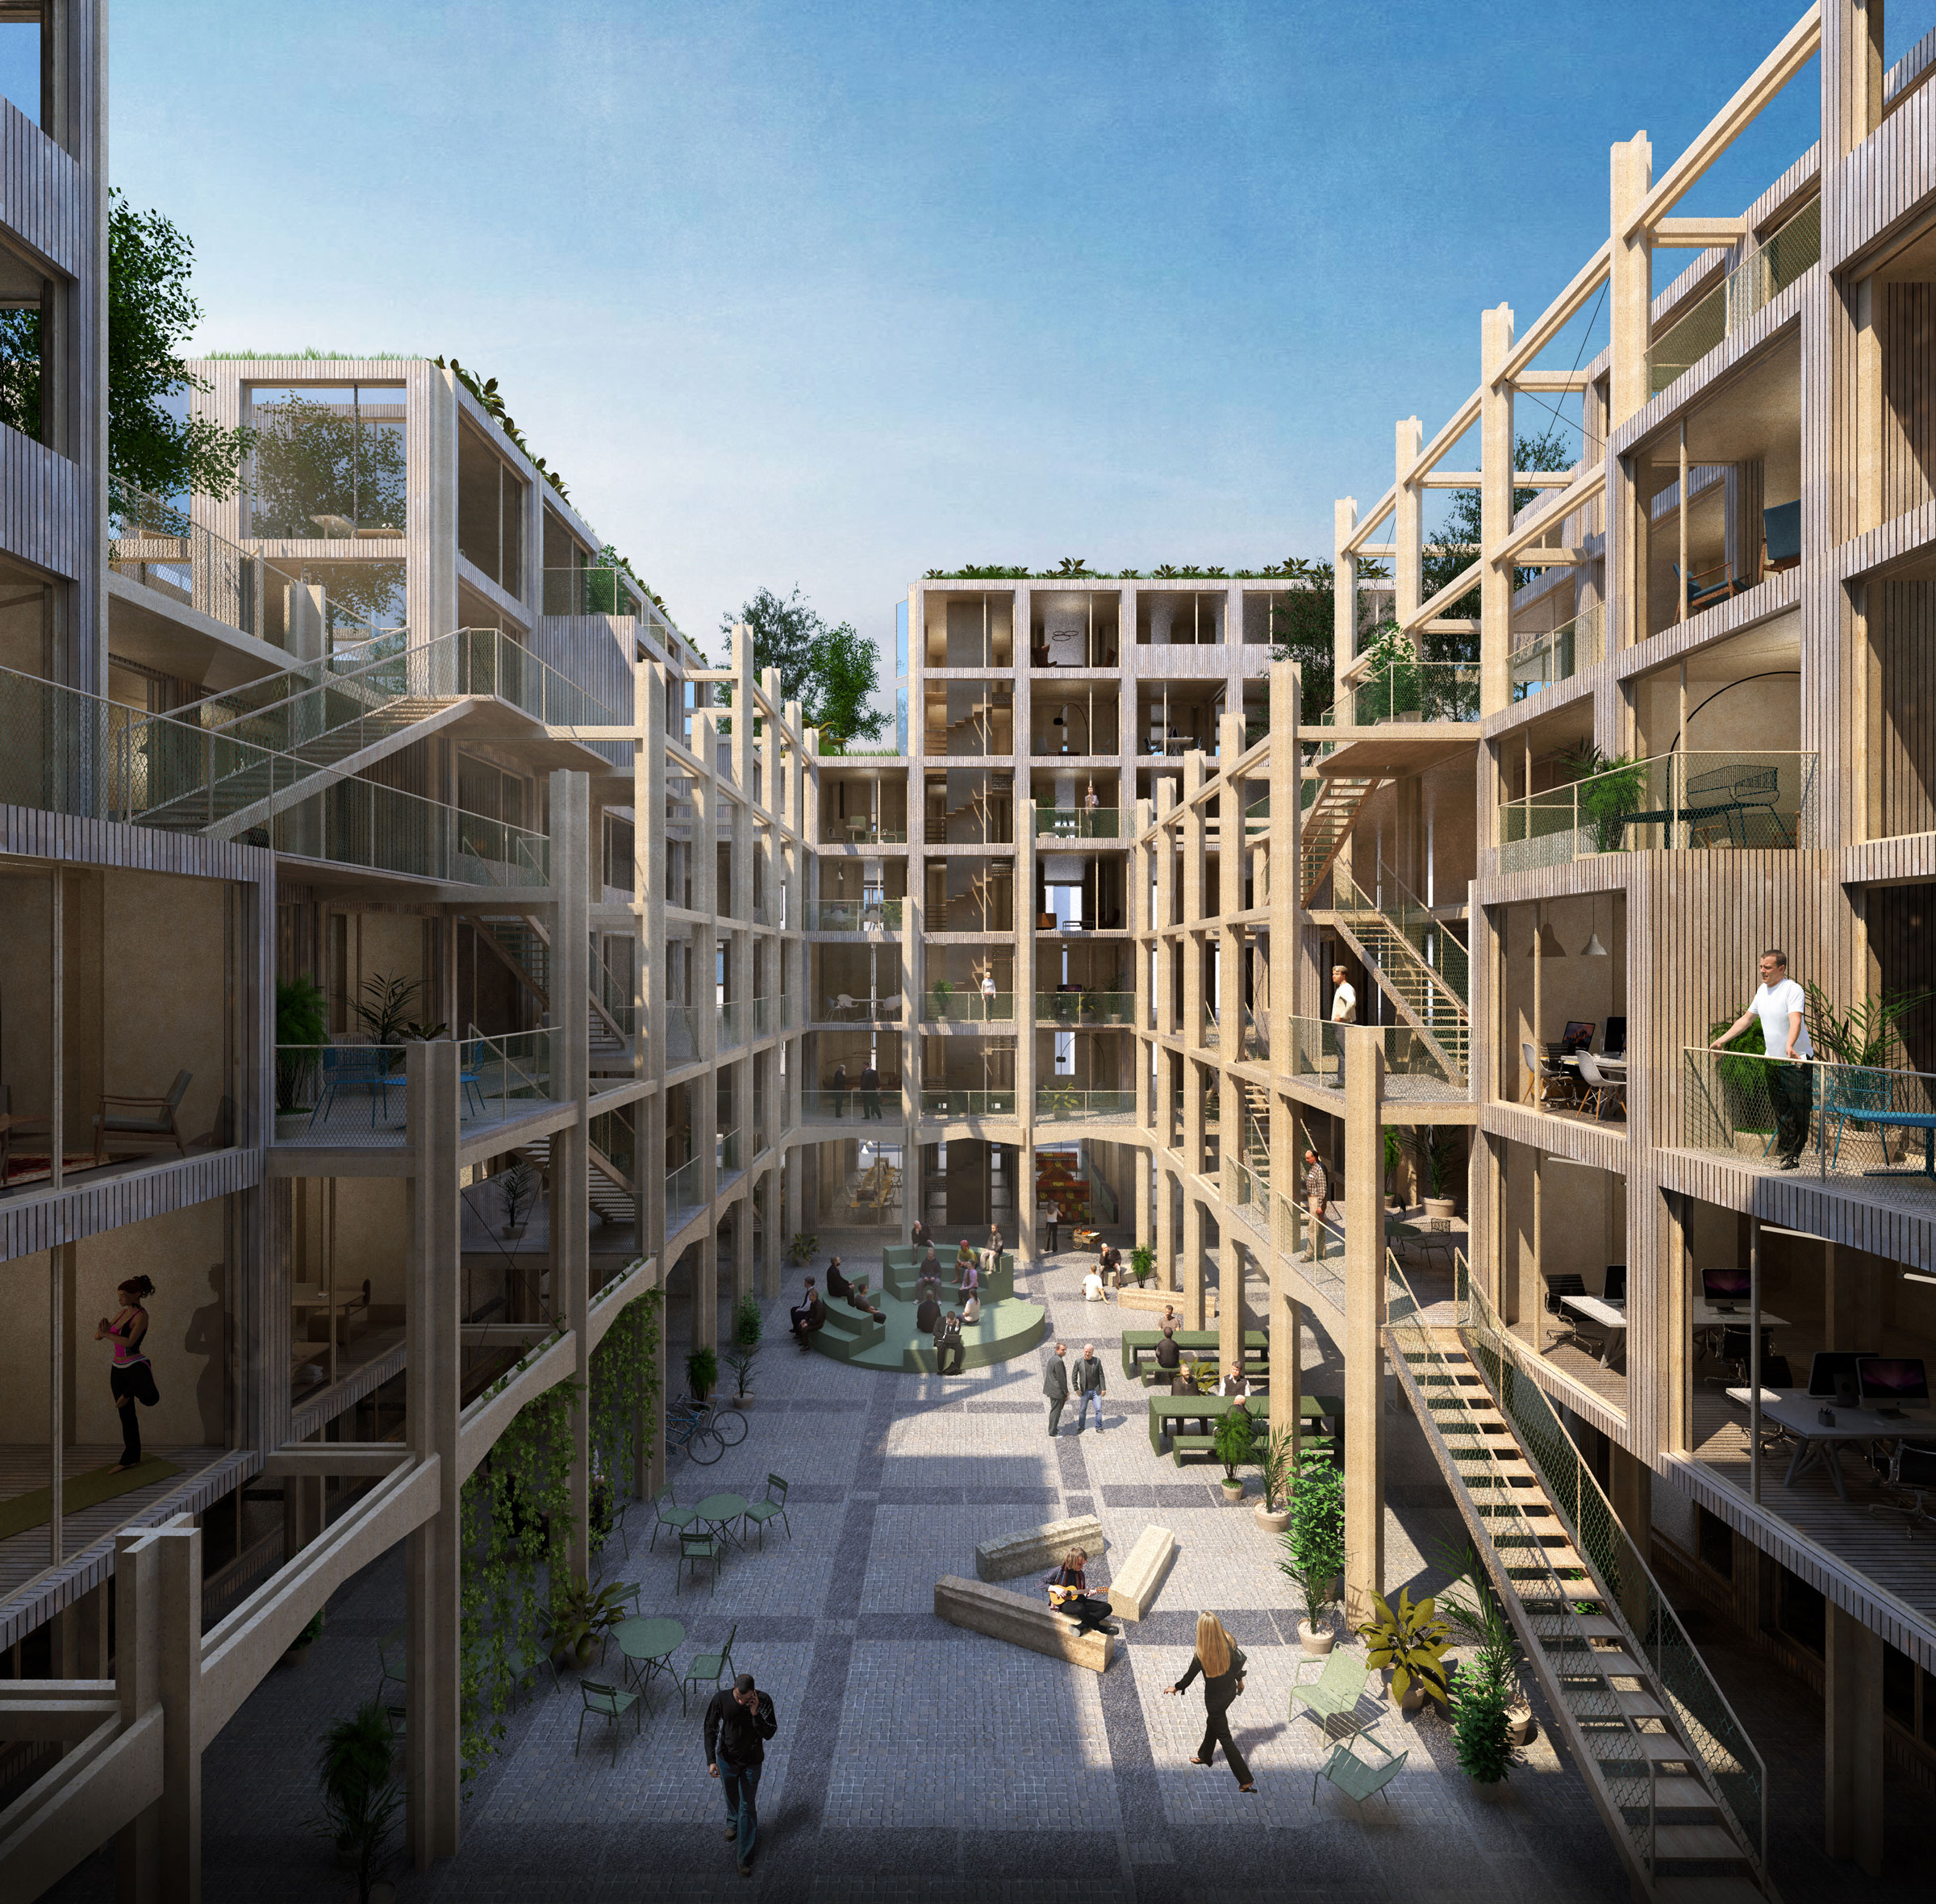 The “aula modula” apartment block design by Studio BELEM (Courtesy of Studio BELEM)